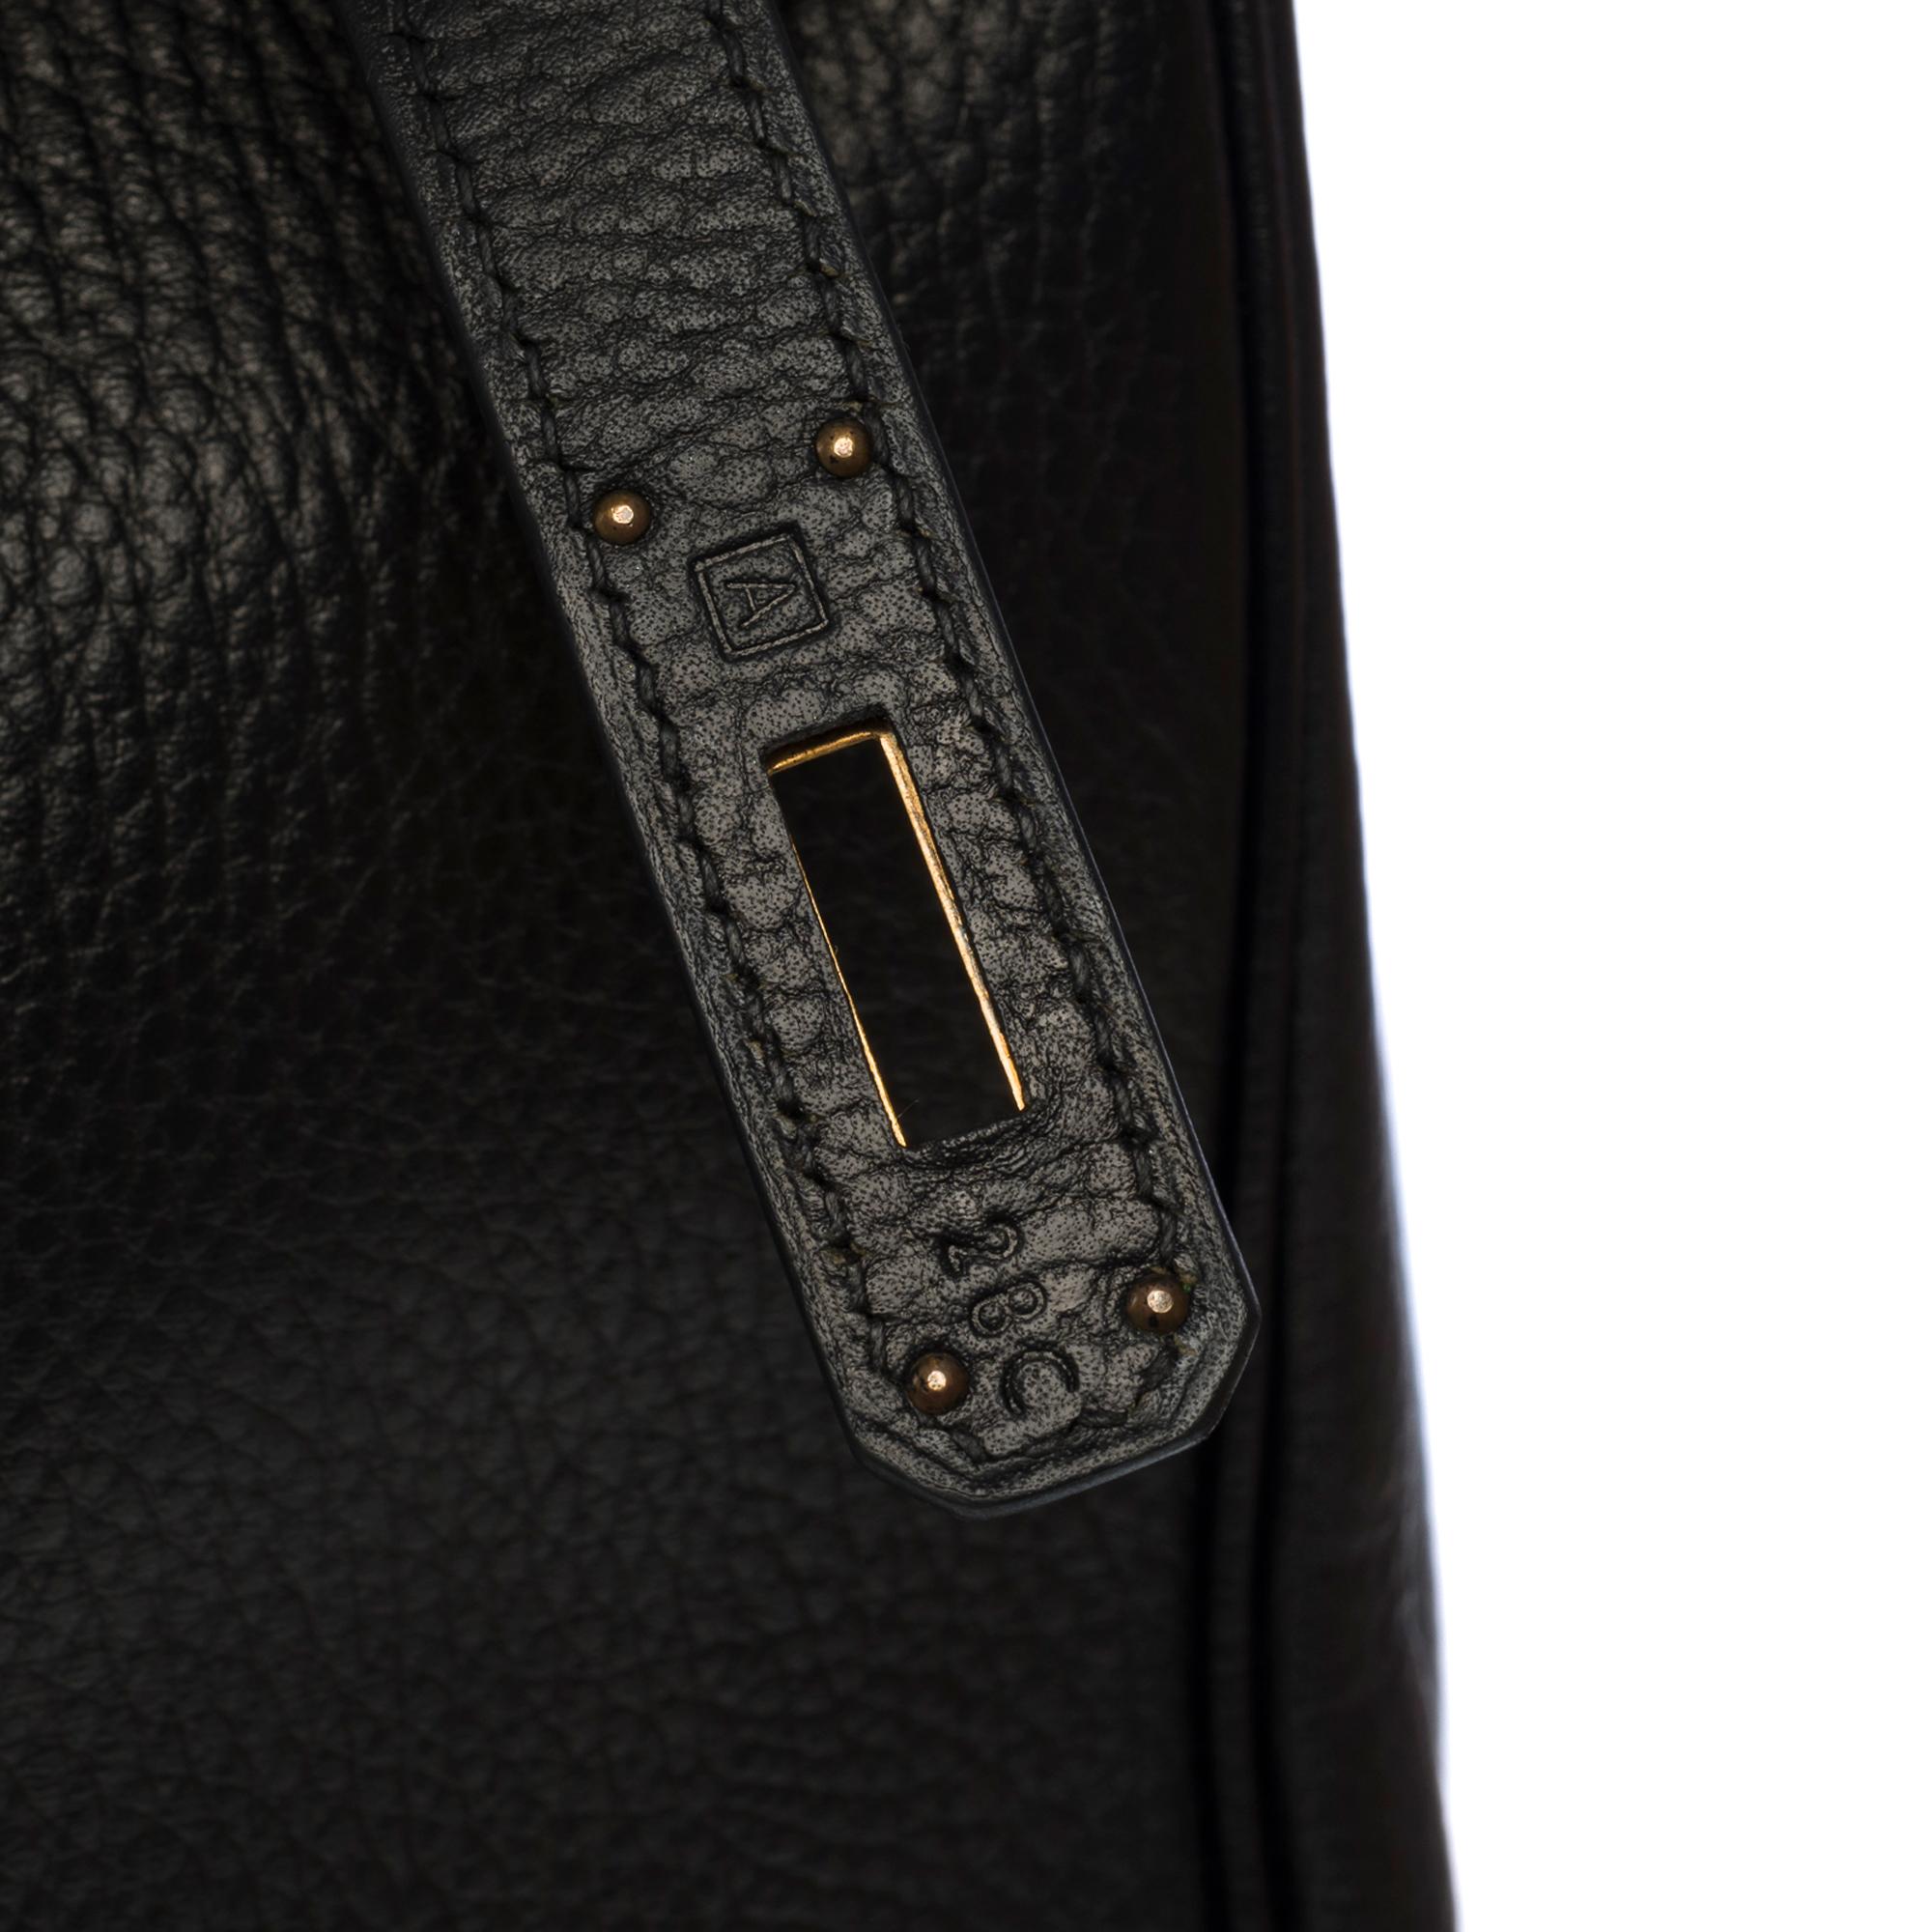 Classy Hermes Birkin 40cm handbag in Black Vache Ardennes Calf leather, GHW 2